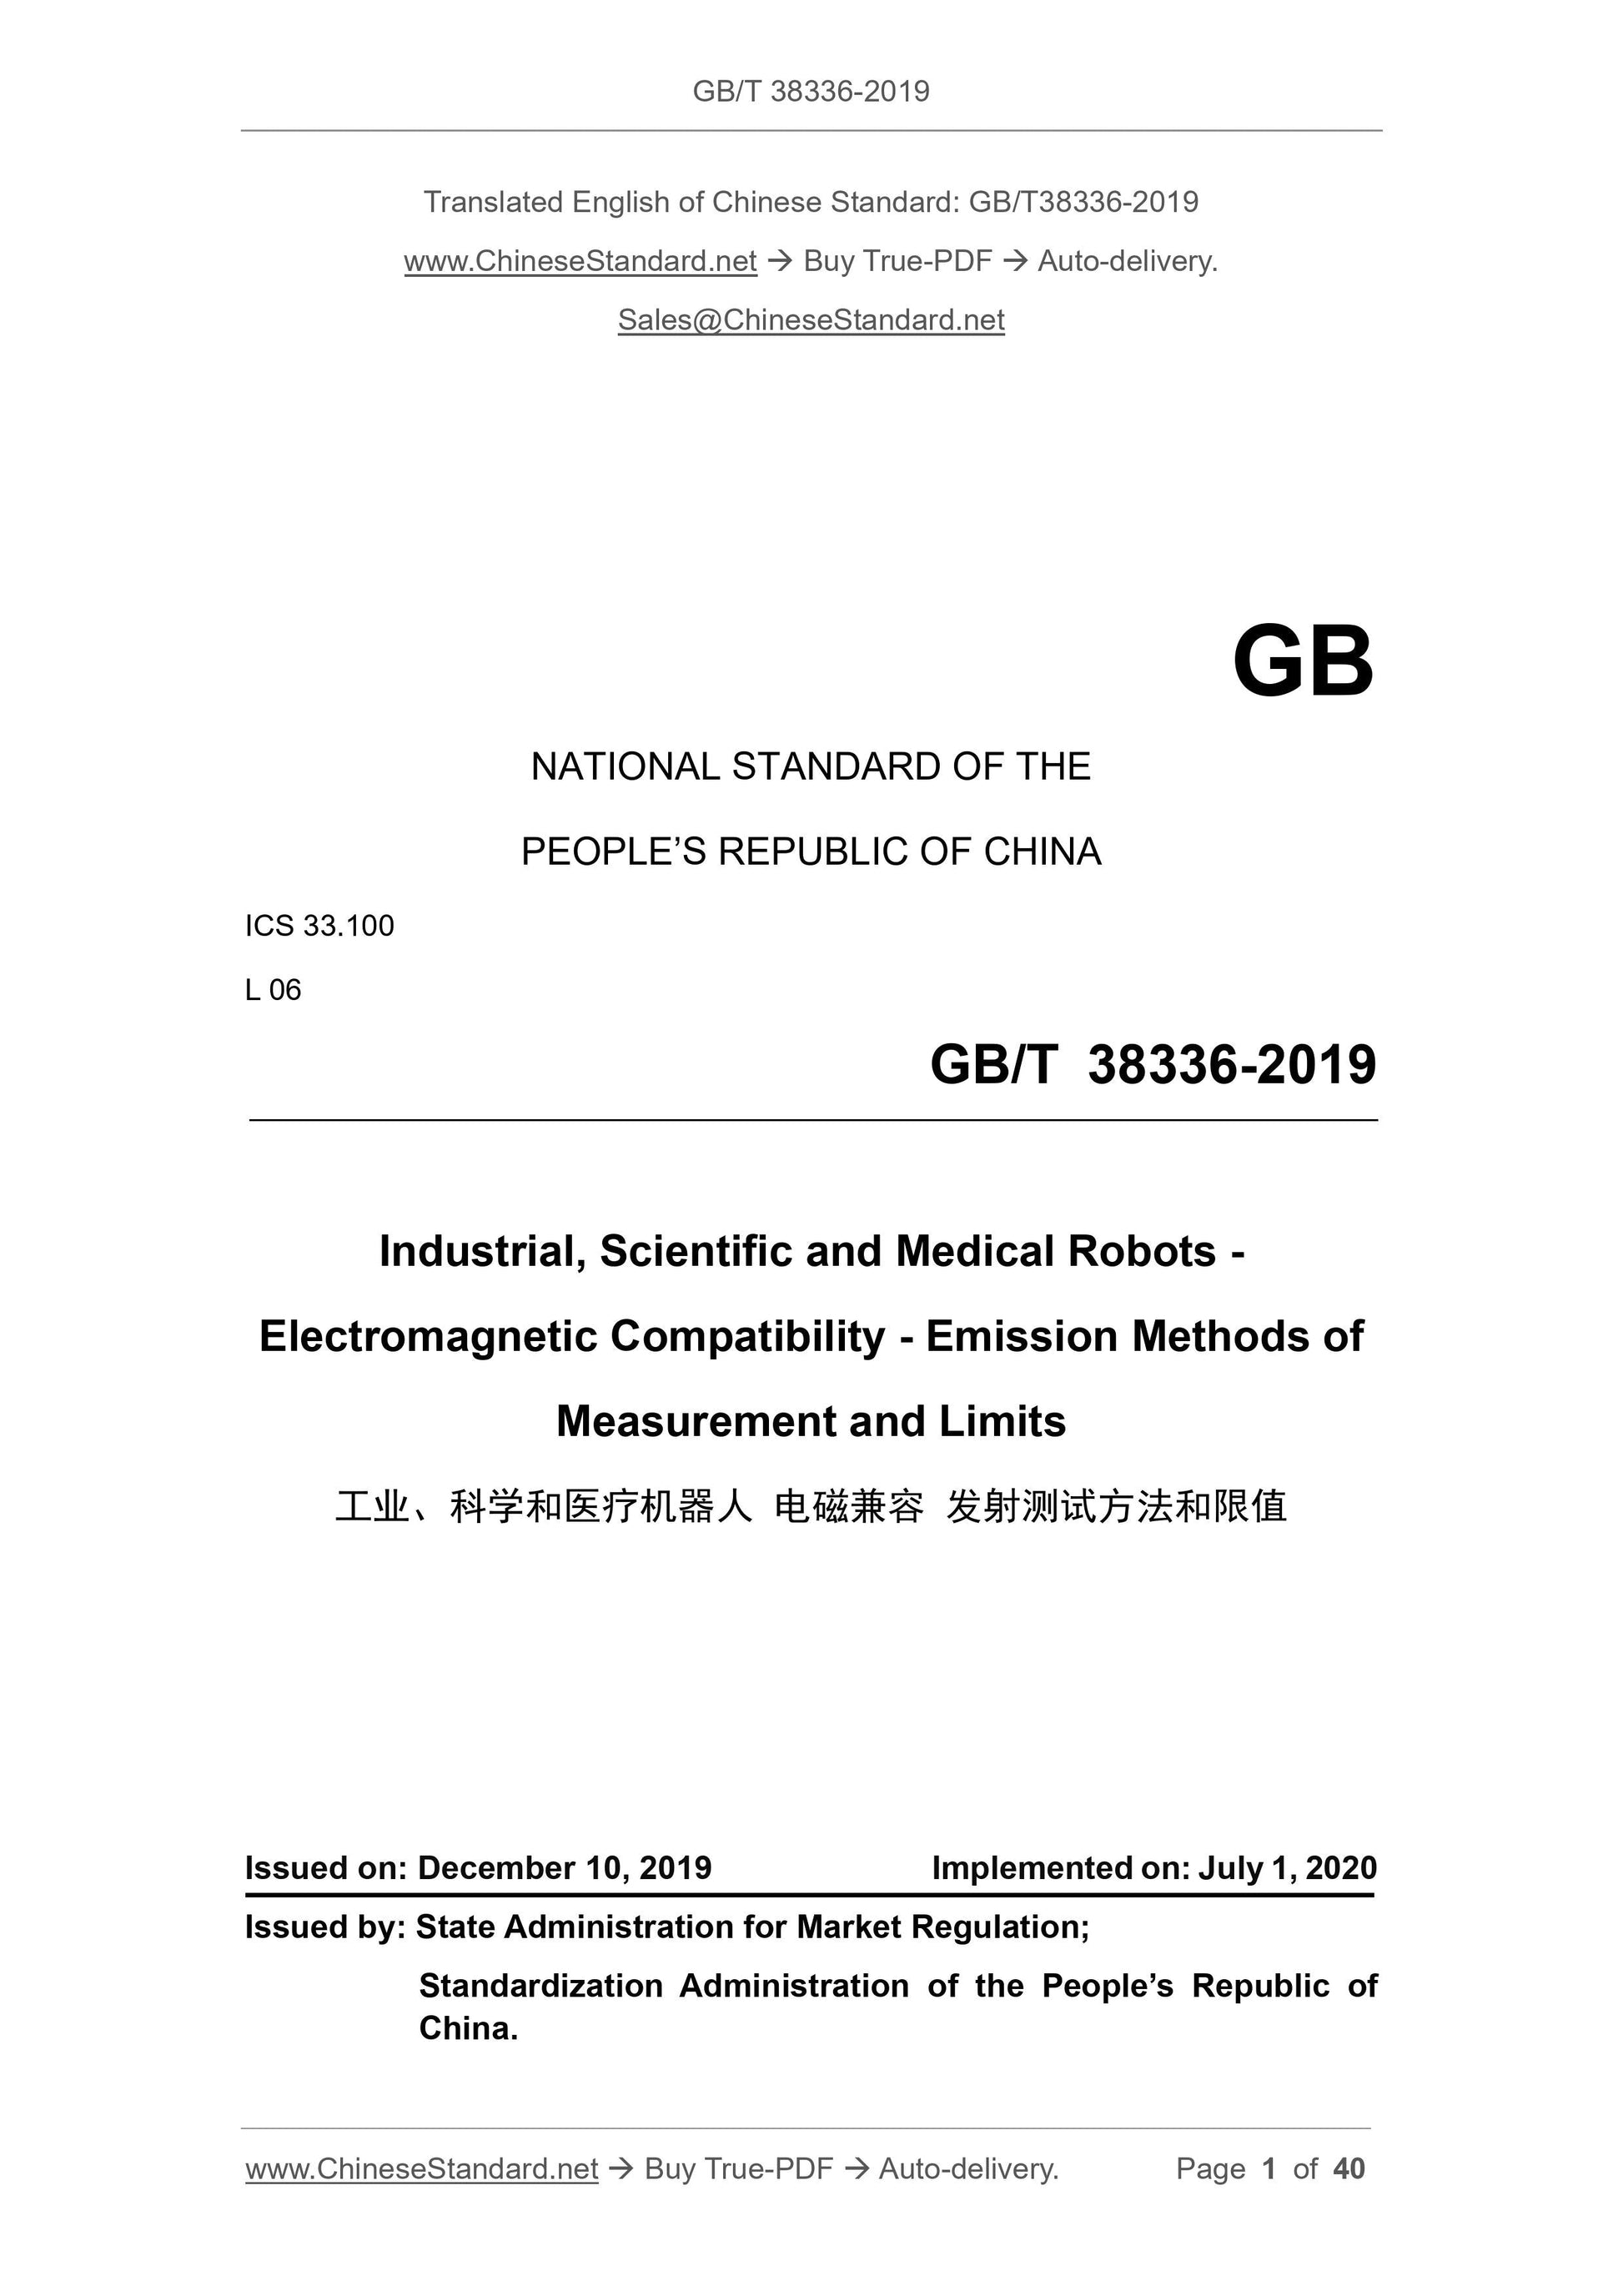 GBT38336-2019 Page 1